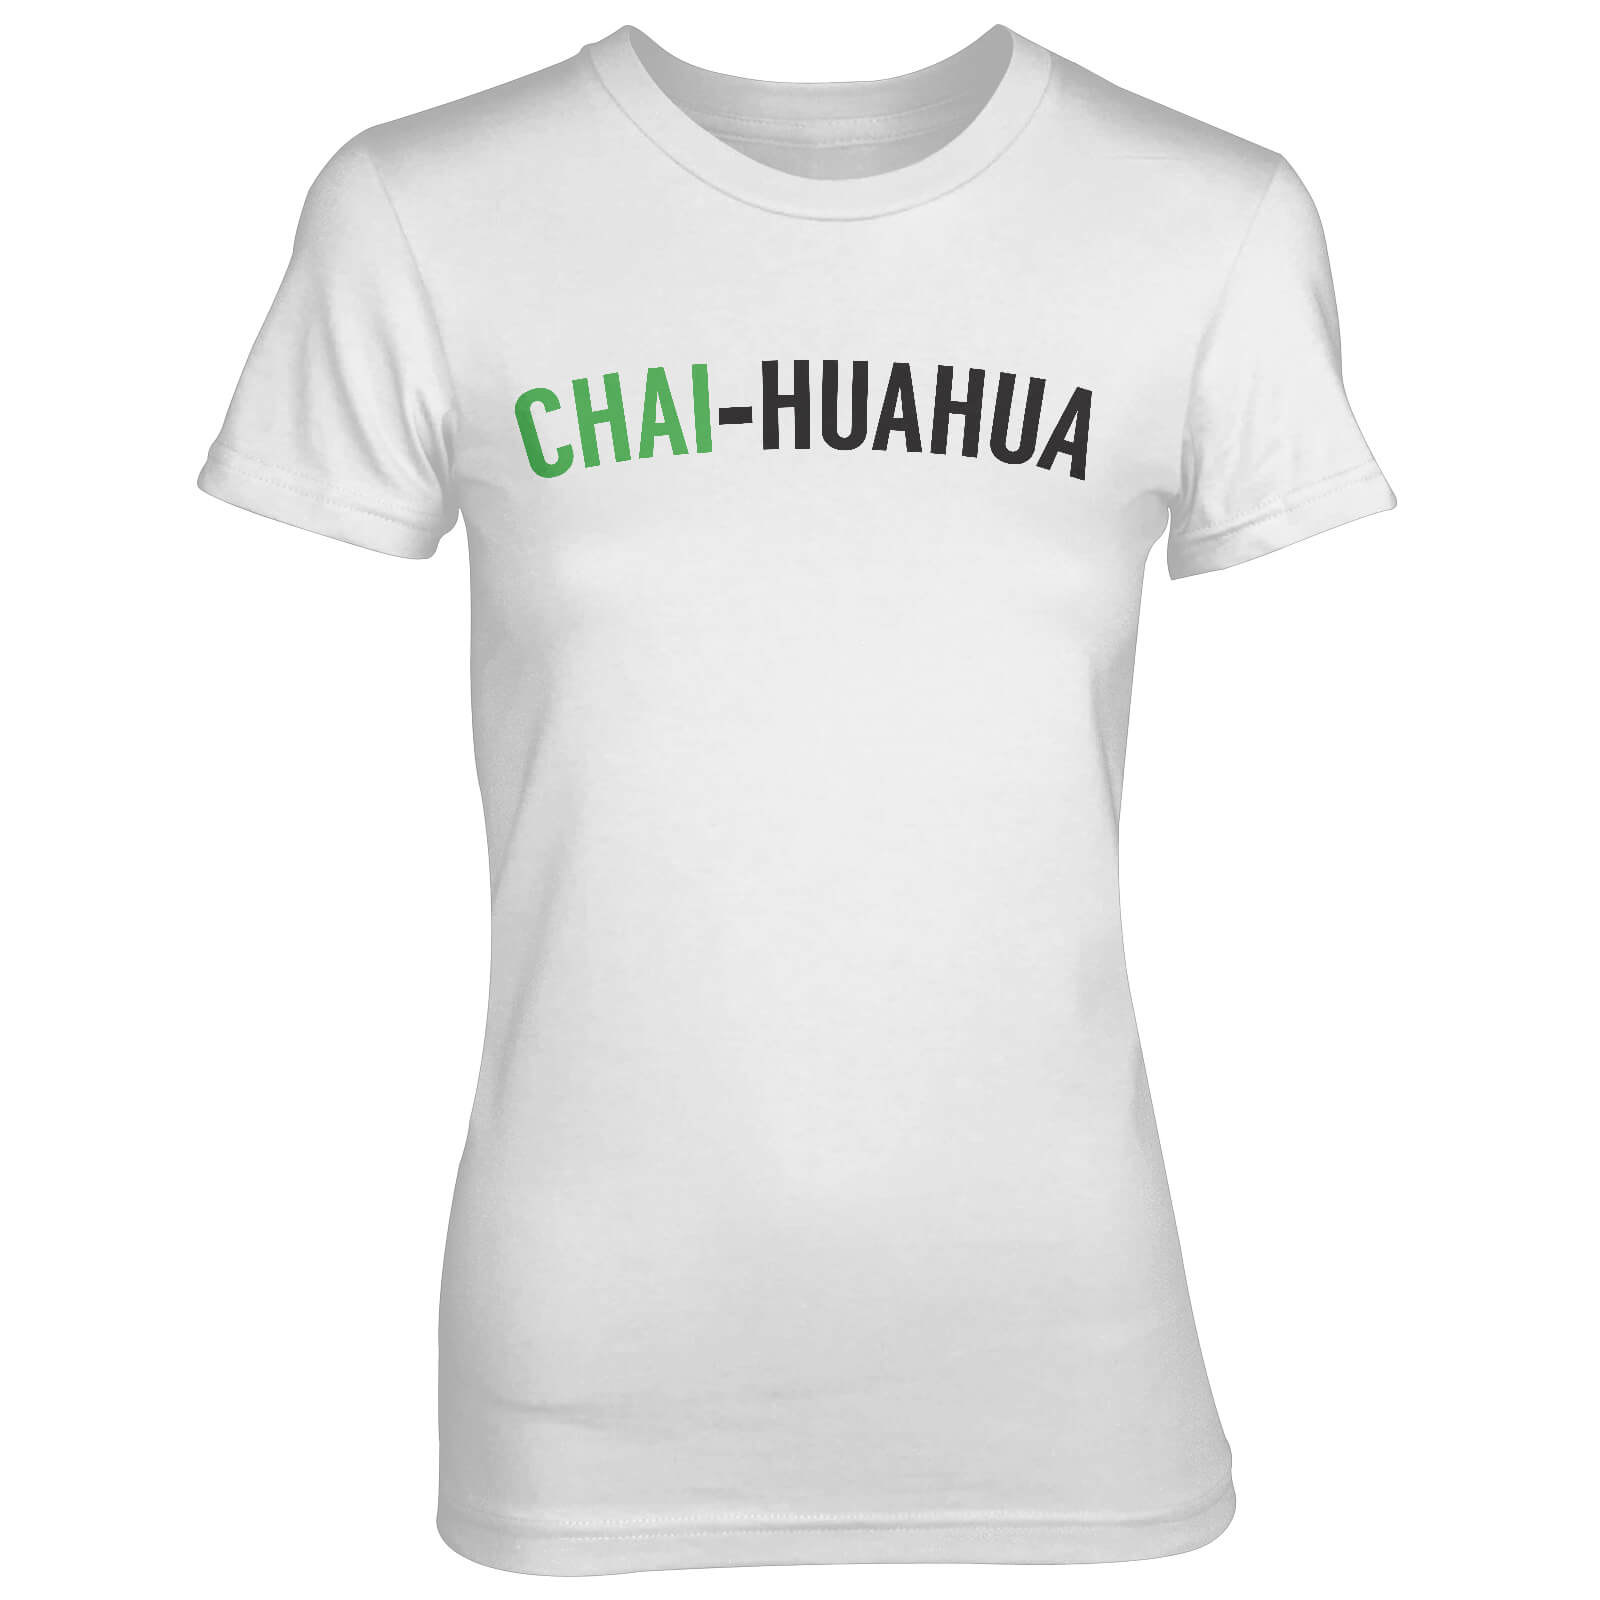 Chai-huahua Women's White T-Shirt - S - White